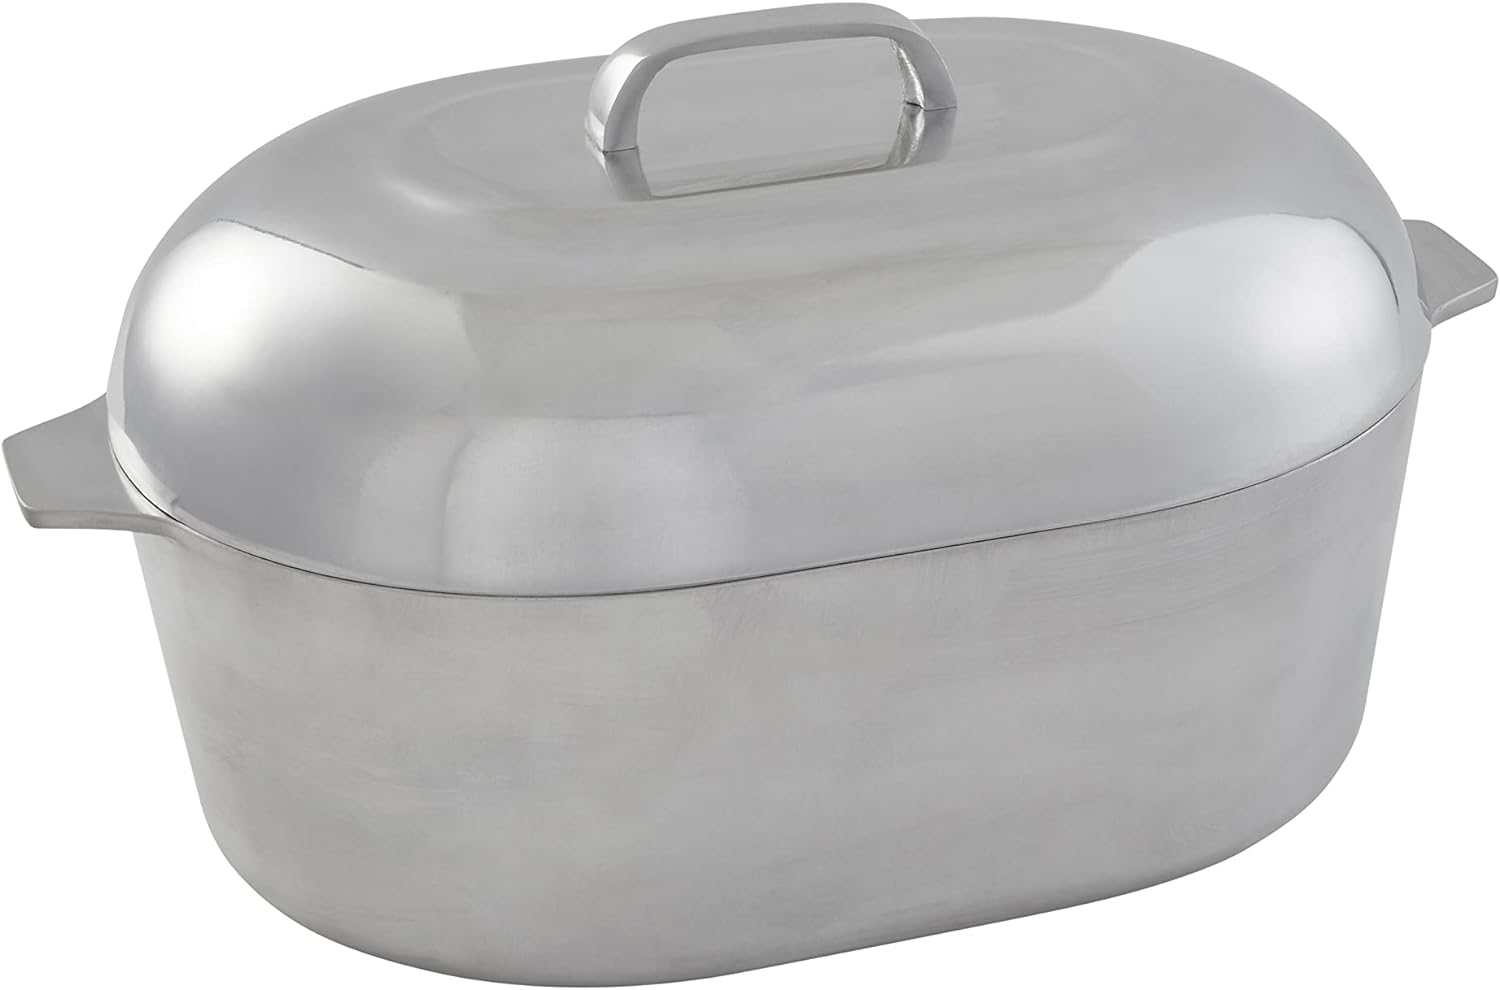 IMUSA 11 inch Cajun Oval Cast Aluminum Roaster Pan with Lid, Silver